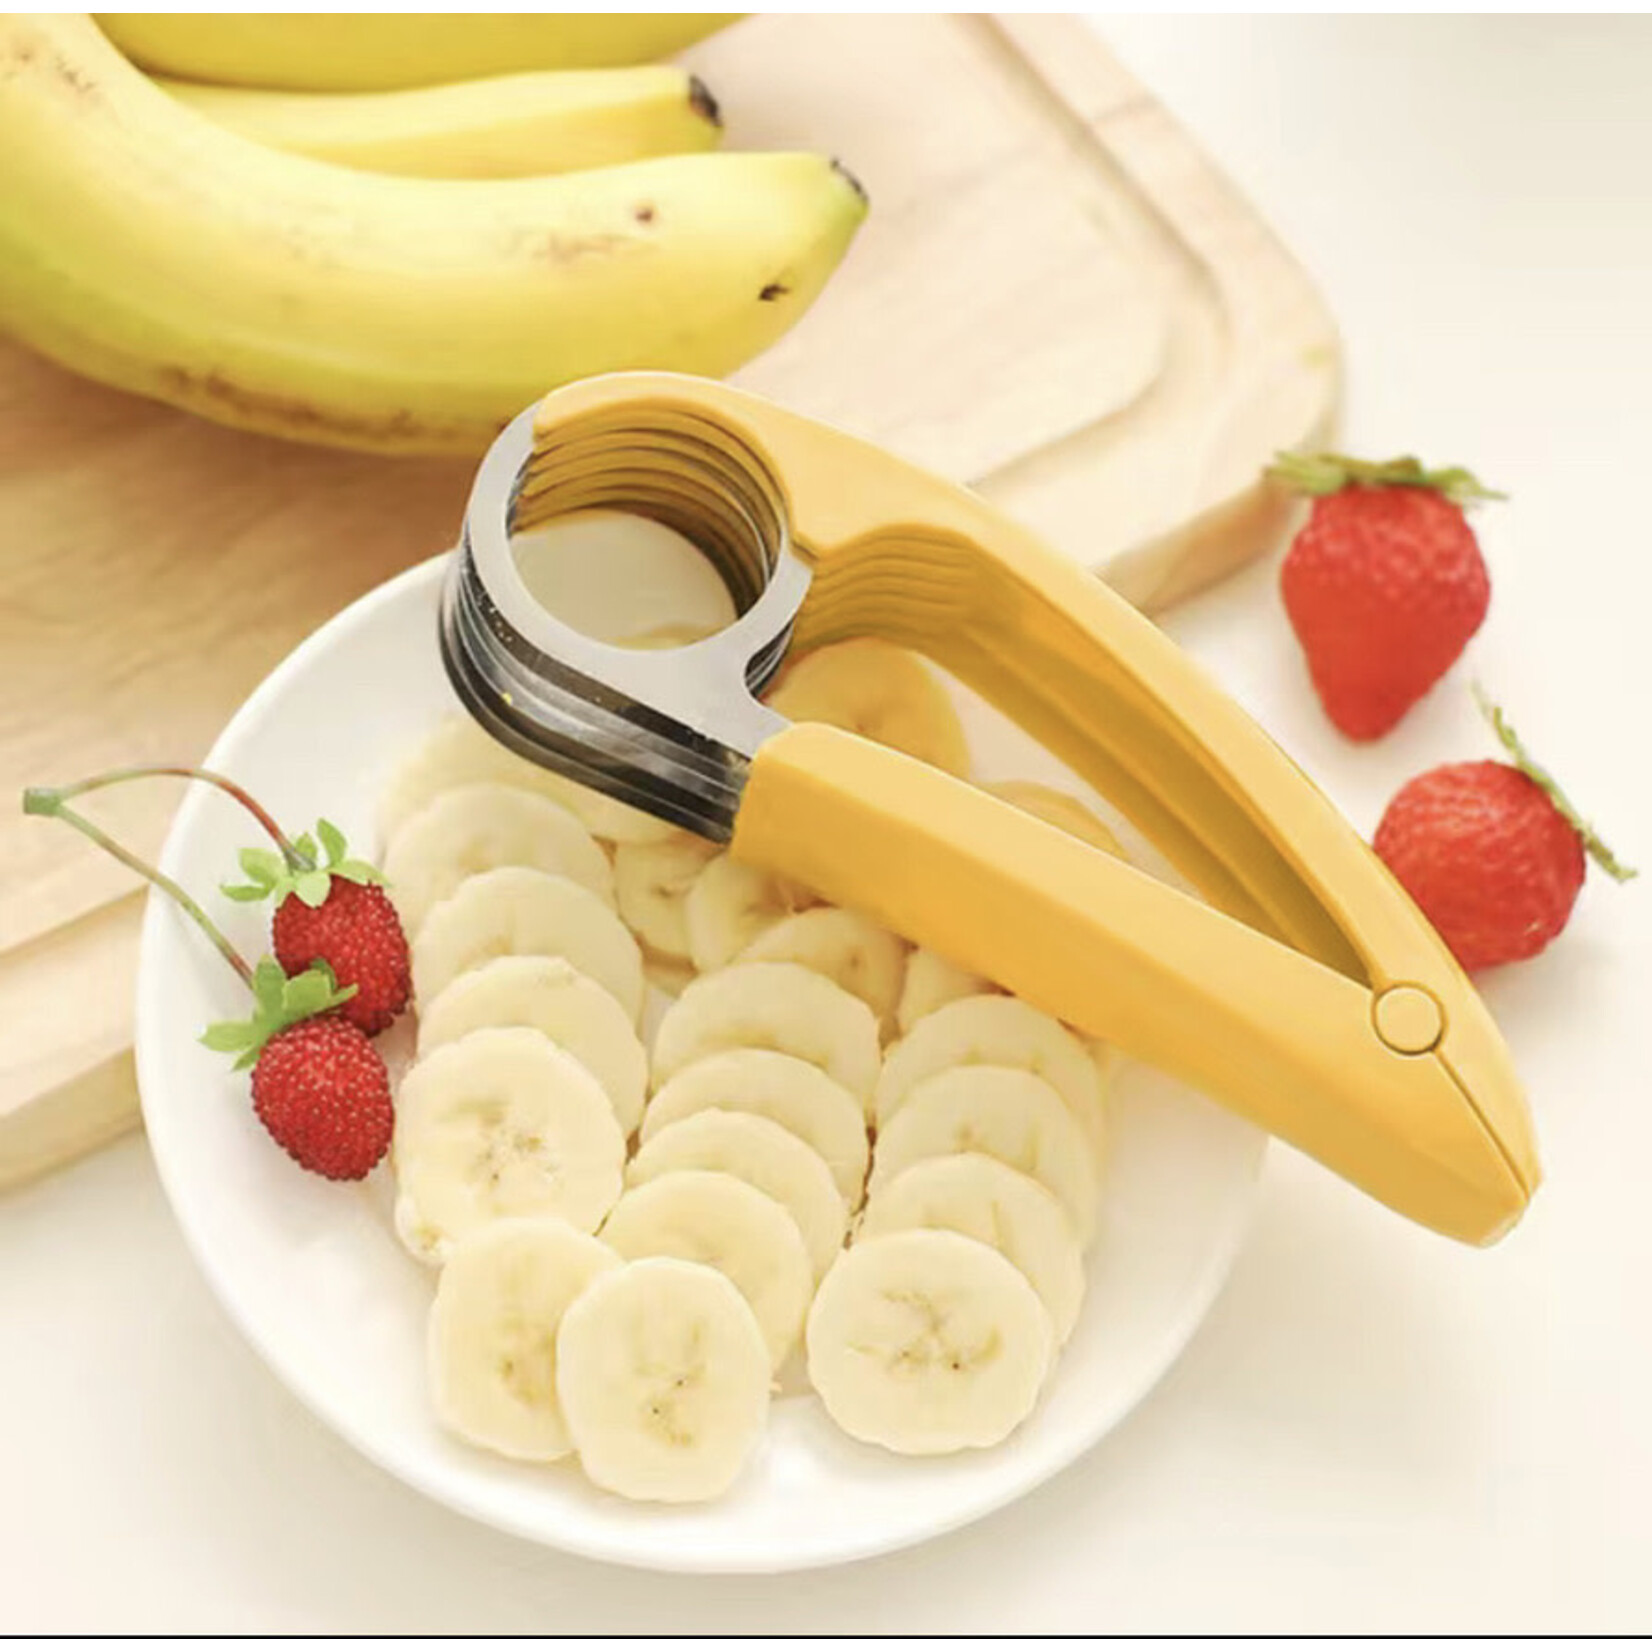 KT KT Banana Slicer